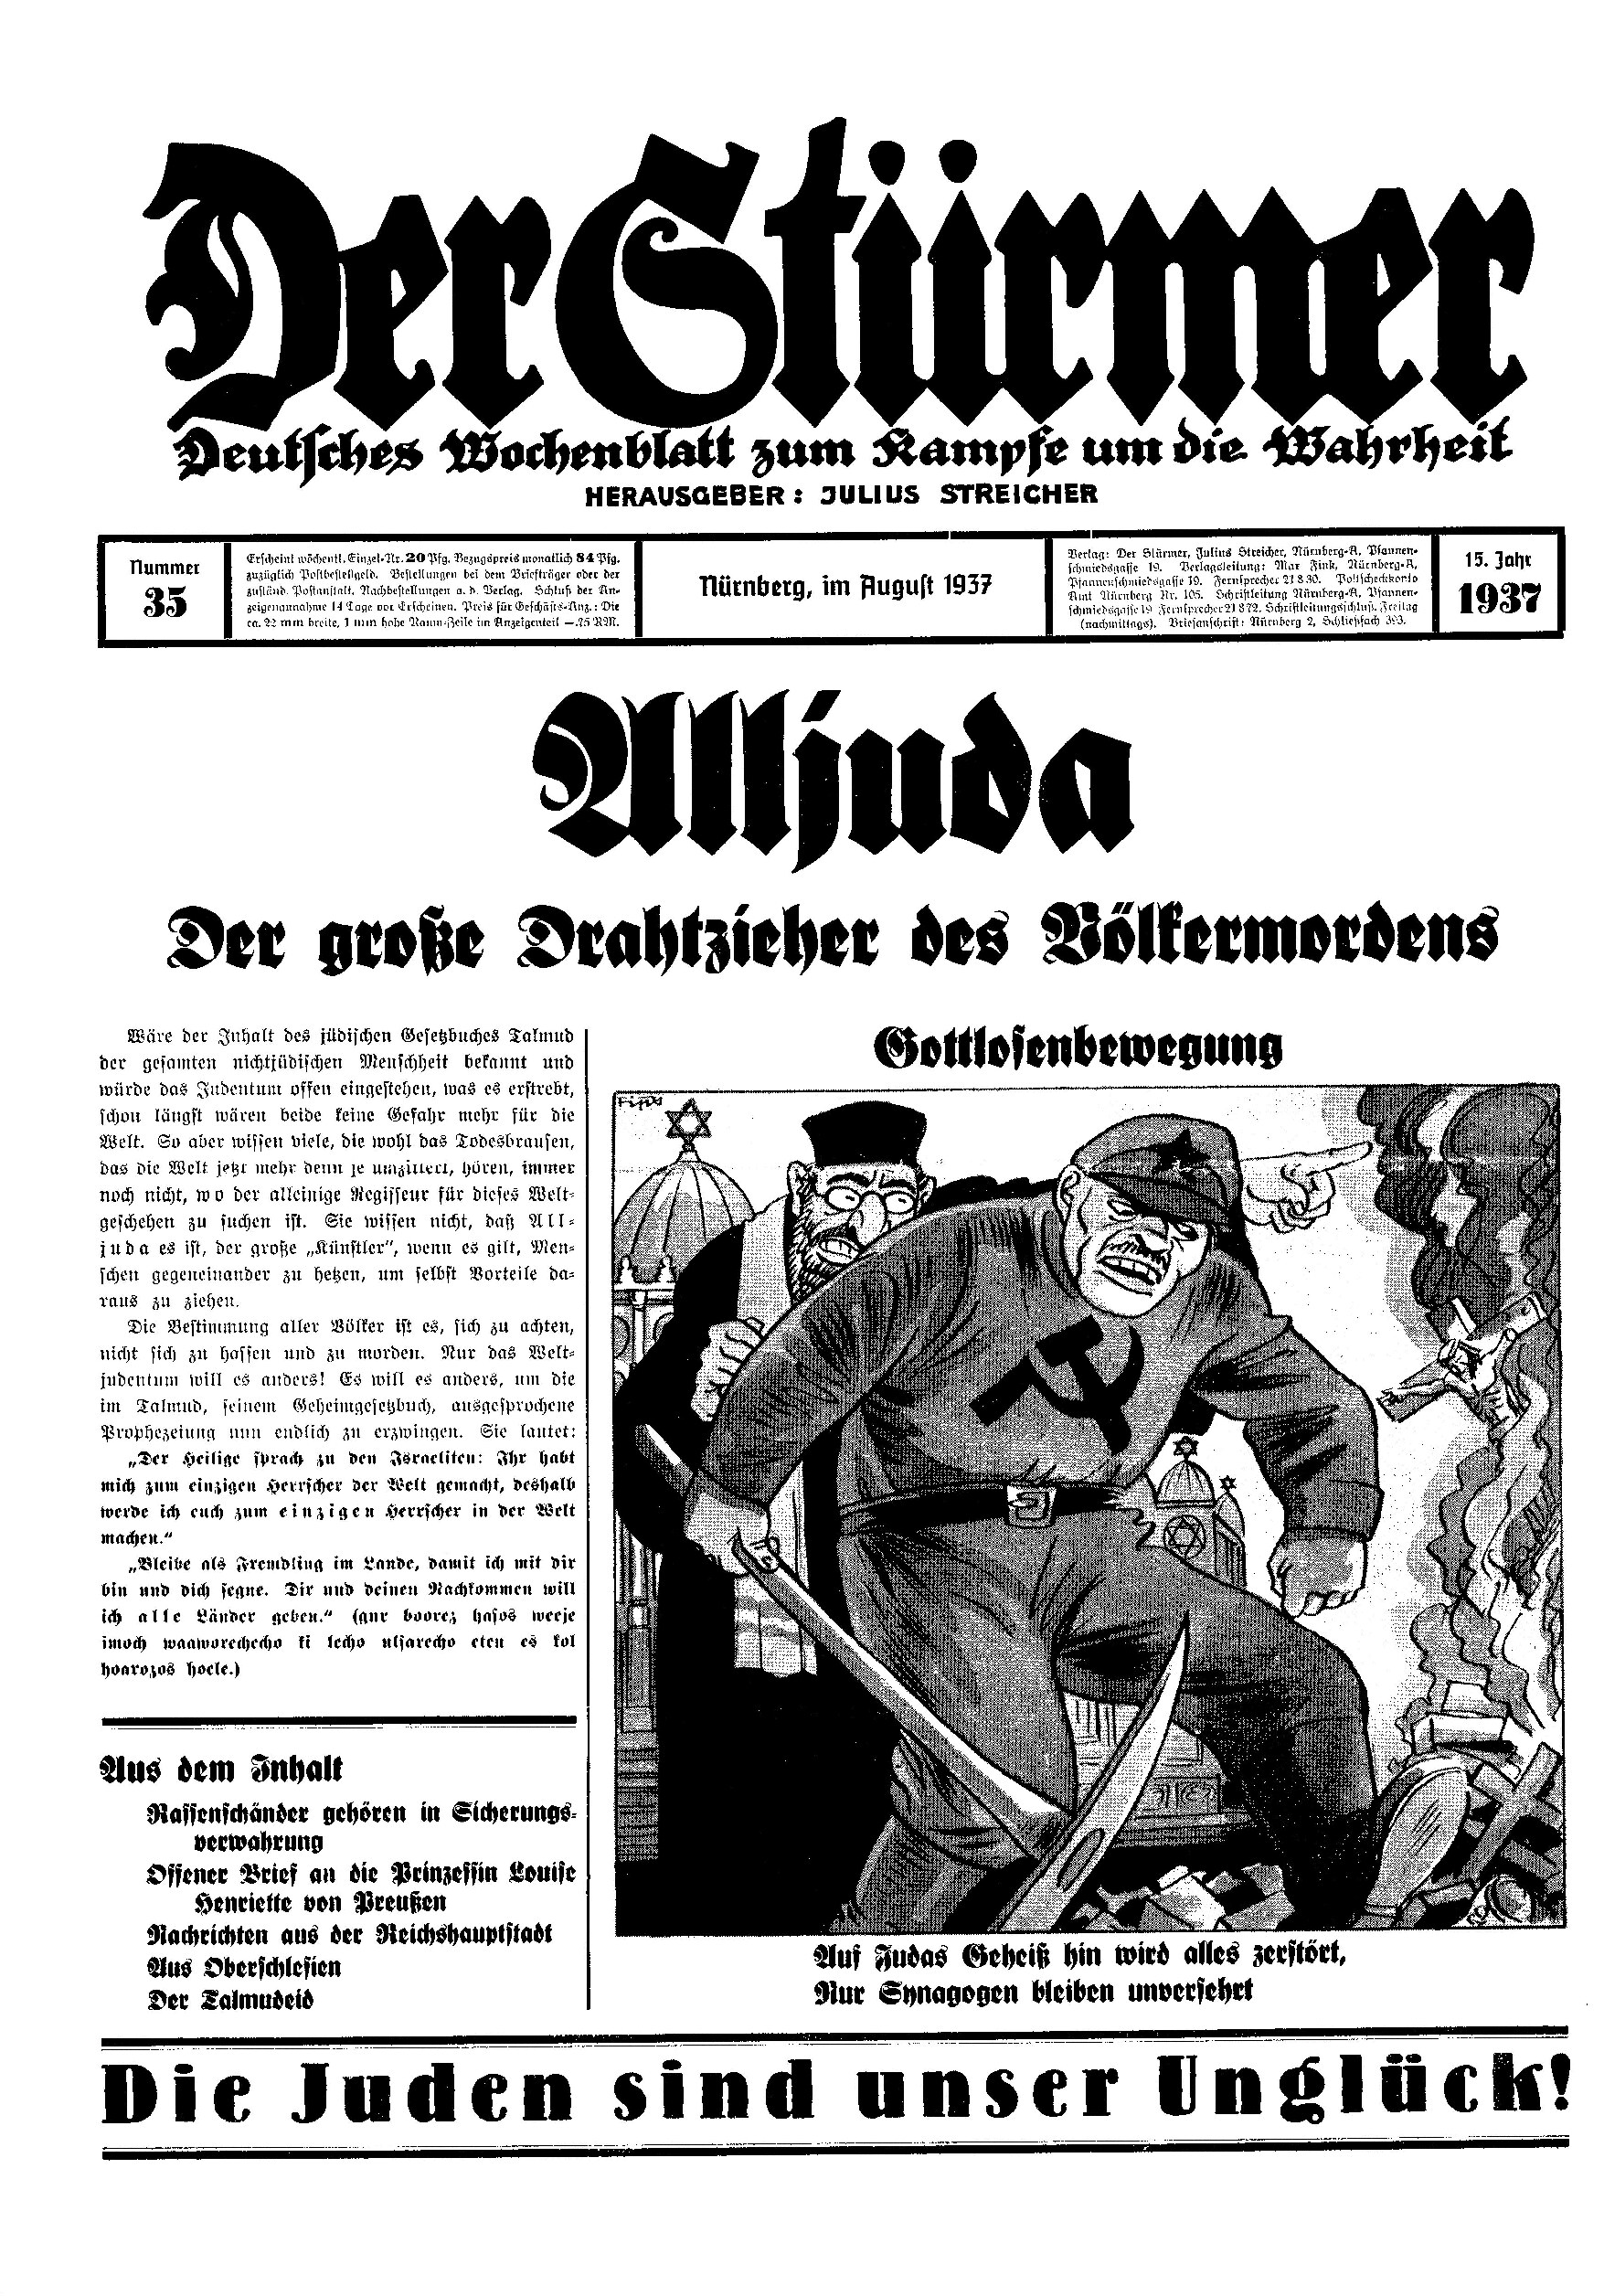 Der Stürmer - 1937 Nr. 35 - Alljuda